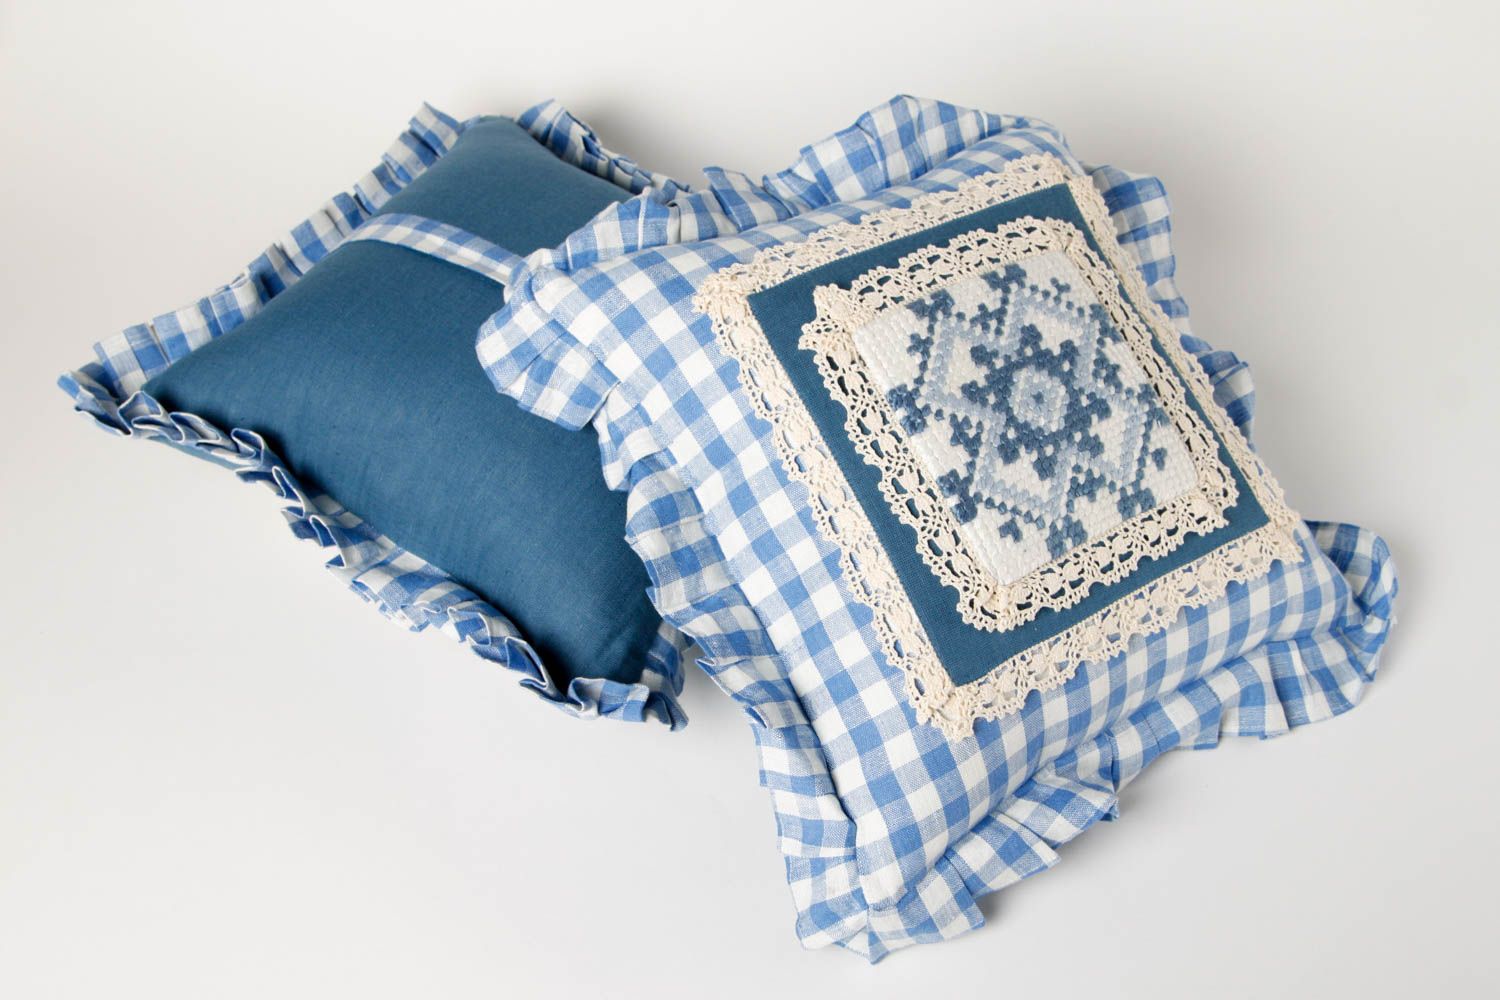 Stylish handmade throw pillow beautiful cushion ideas home textiles small gifts photo 1